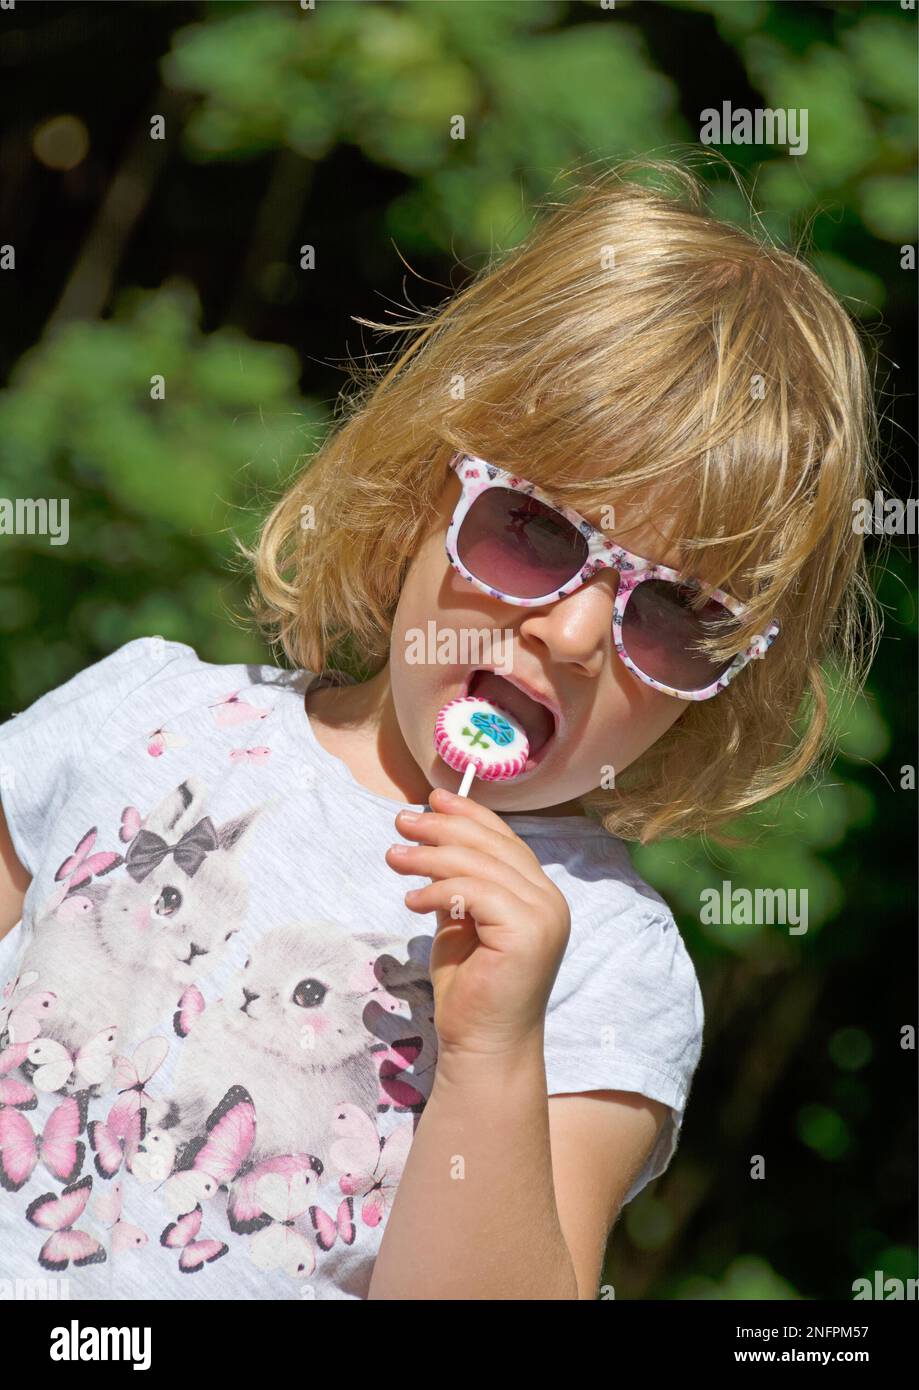 Sweet child sucking a lollipop outdoors. Portrait format Stock Photo